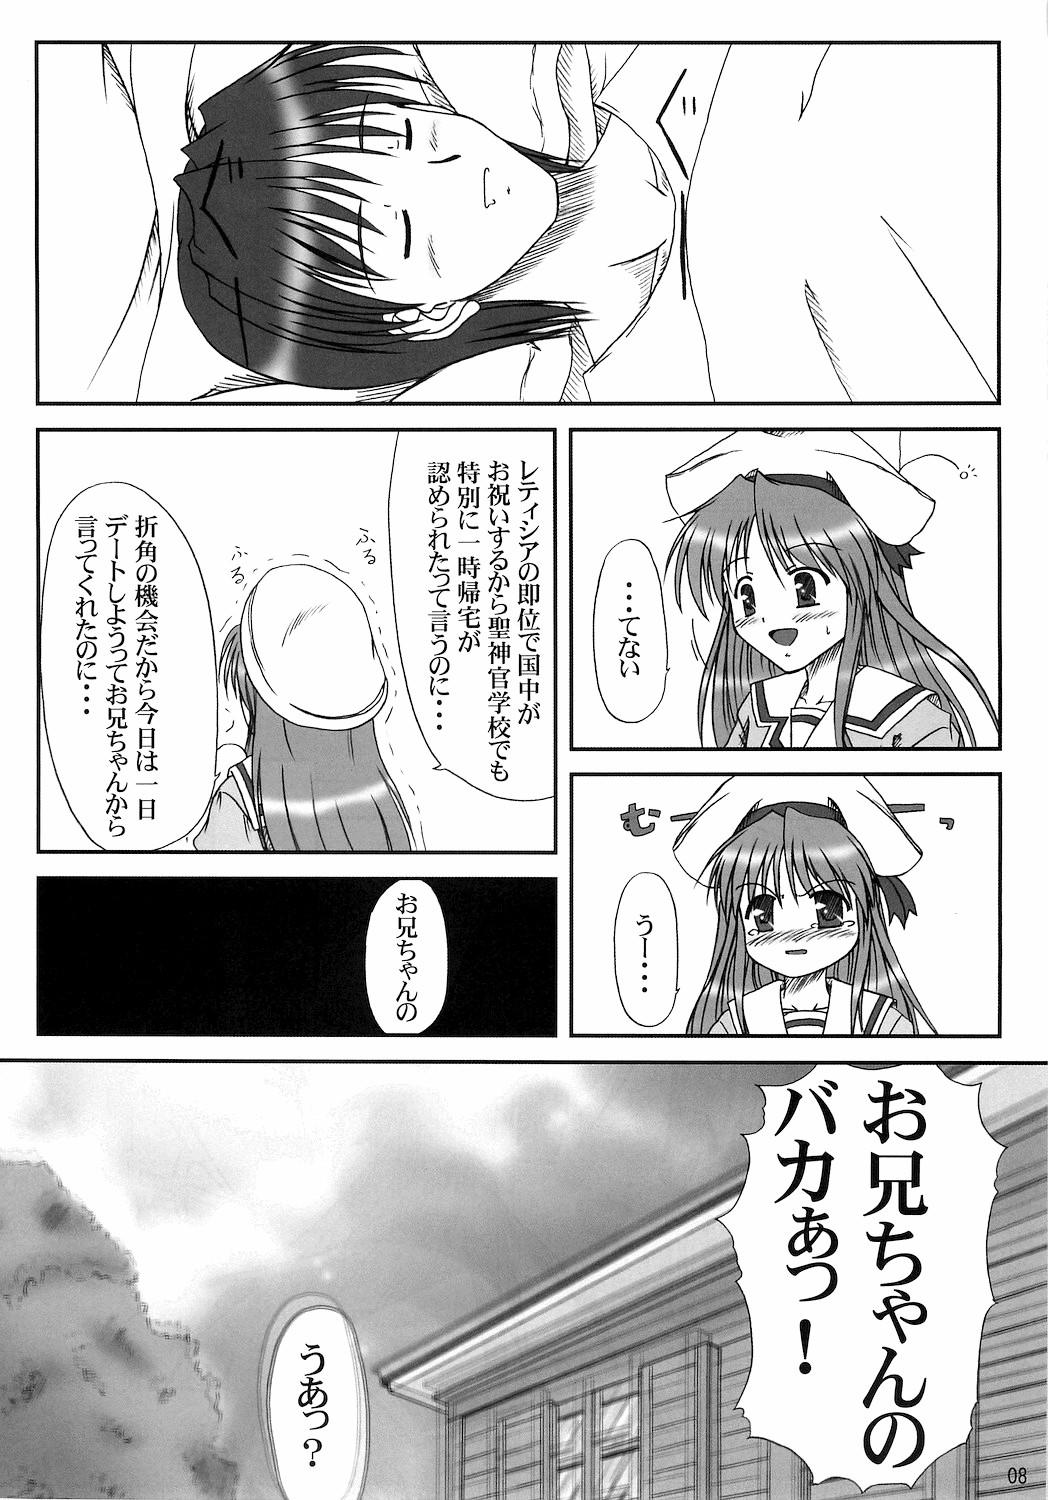 Bj Sister & sister? - Tsuki wa higashi ni hi wa nishi ni Princess holiday Romantic - Page 6